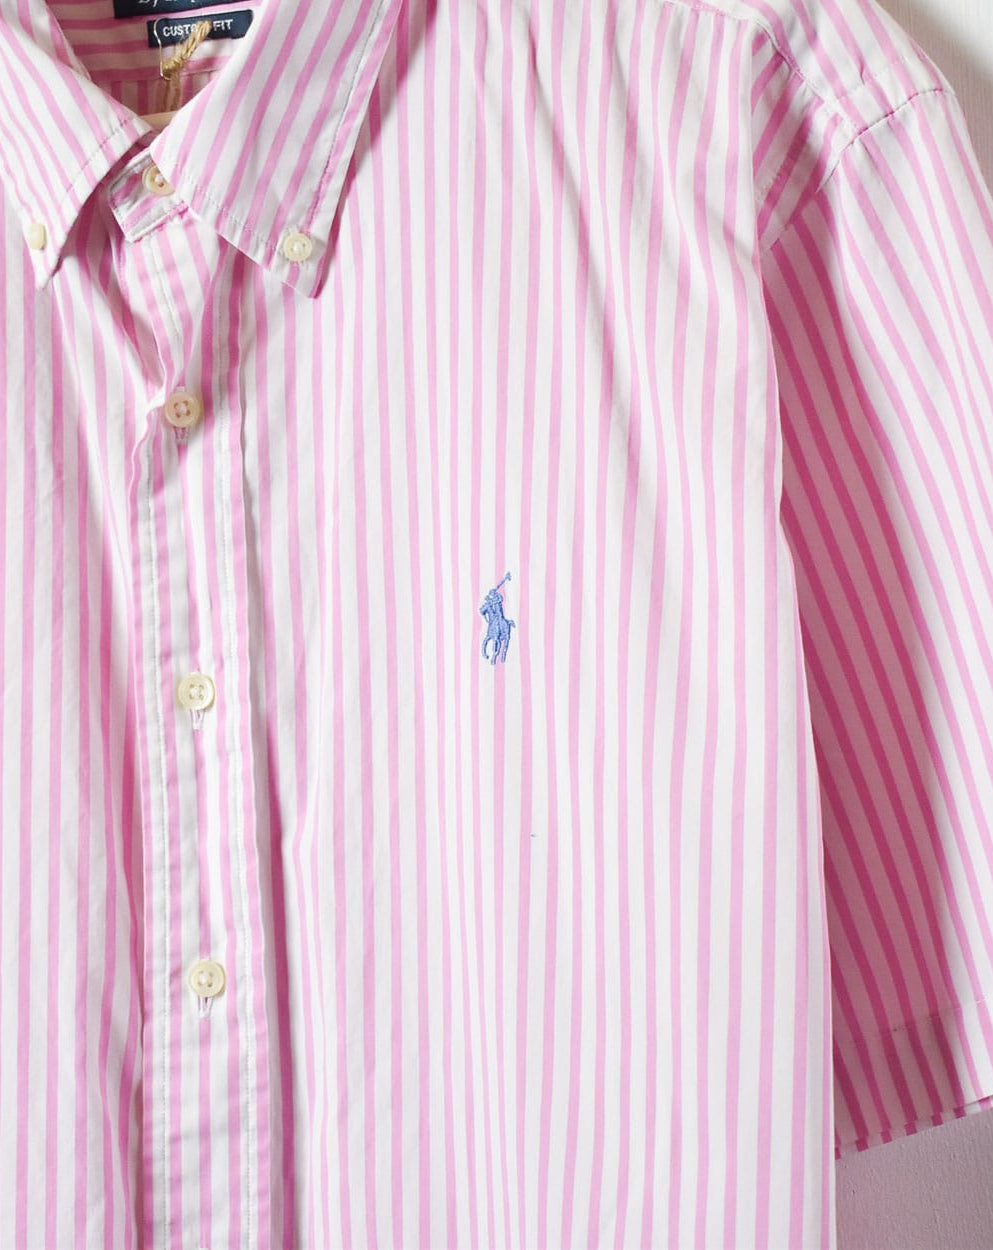 Pink Polo Ralph Lauren Striped Short Sleeved Shirt - X-Large